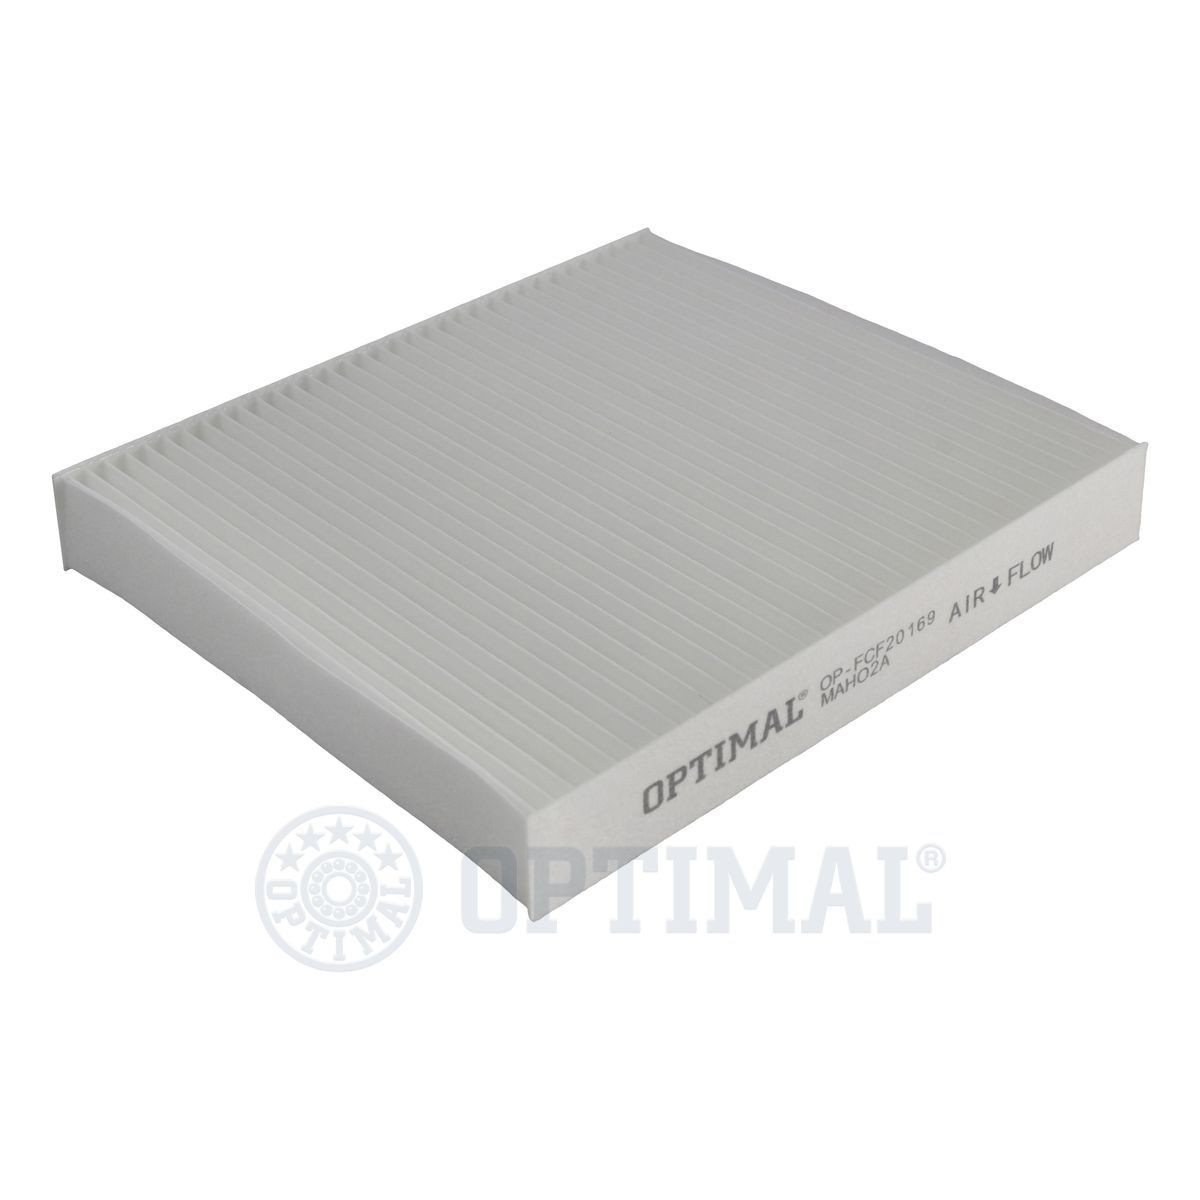 OPTIMAL OP-FCF20169 Pollen filter 95860-61M00-000